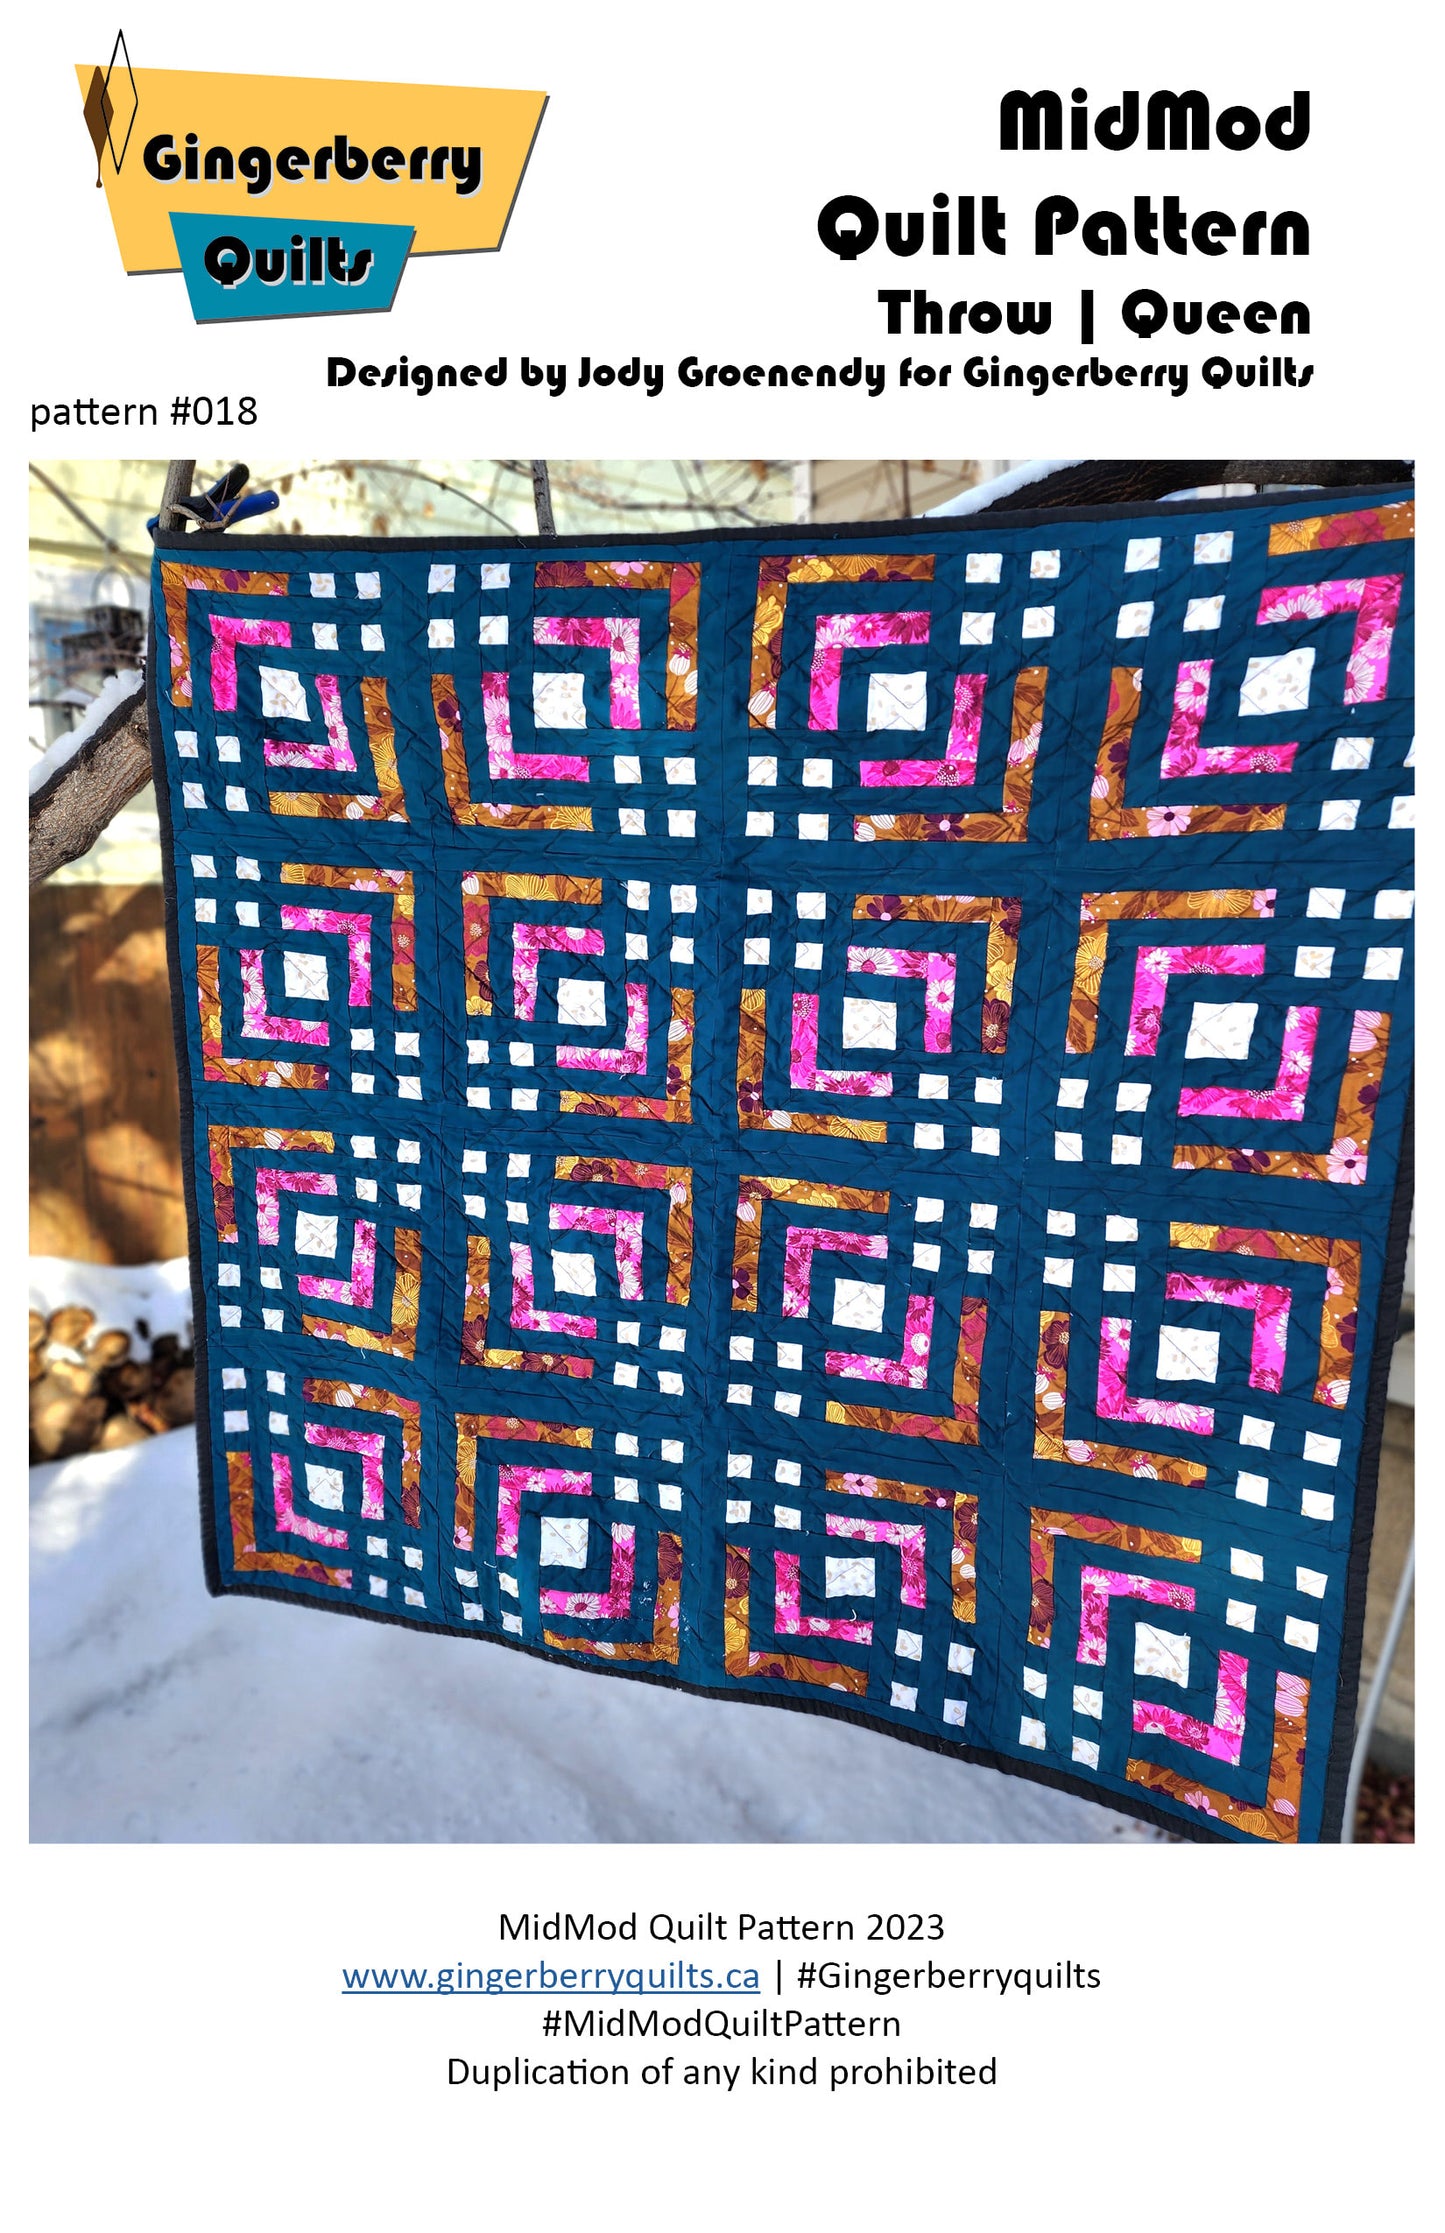 MidMod Tea Towel and Modern Quilt Pattern Bundle